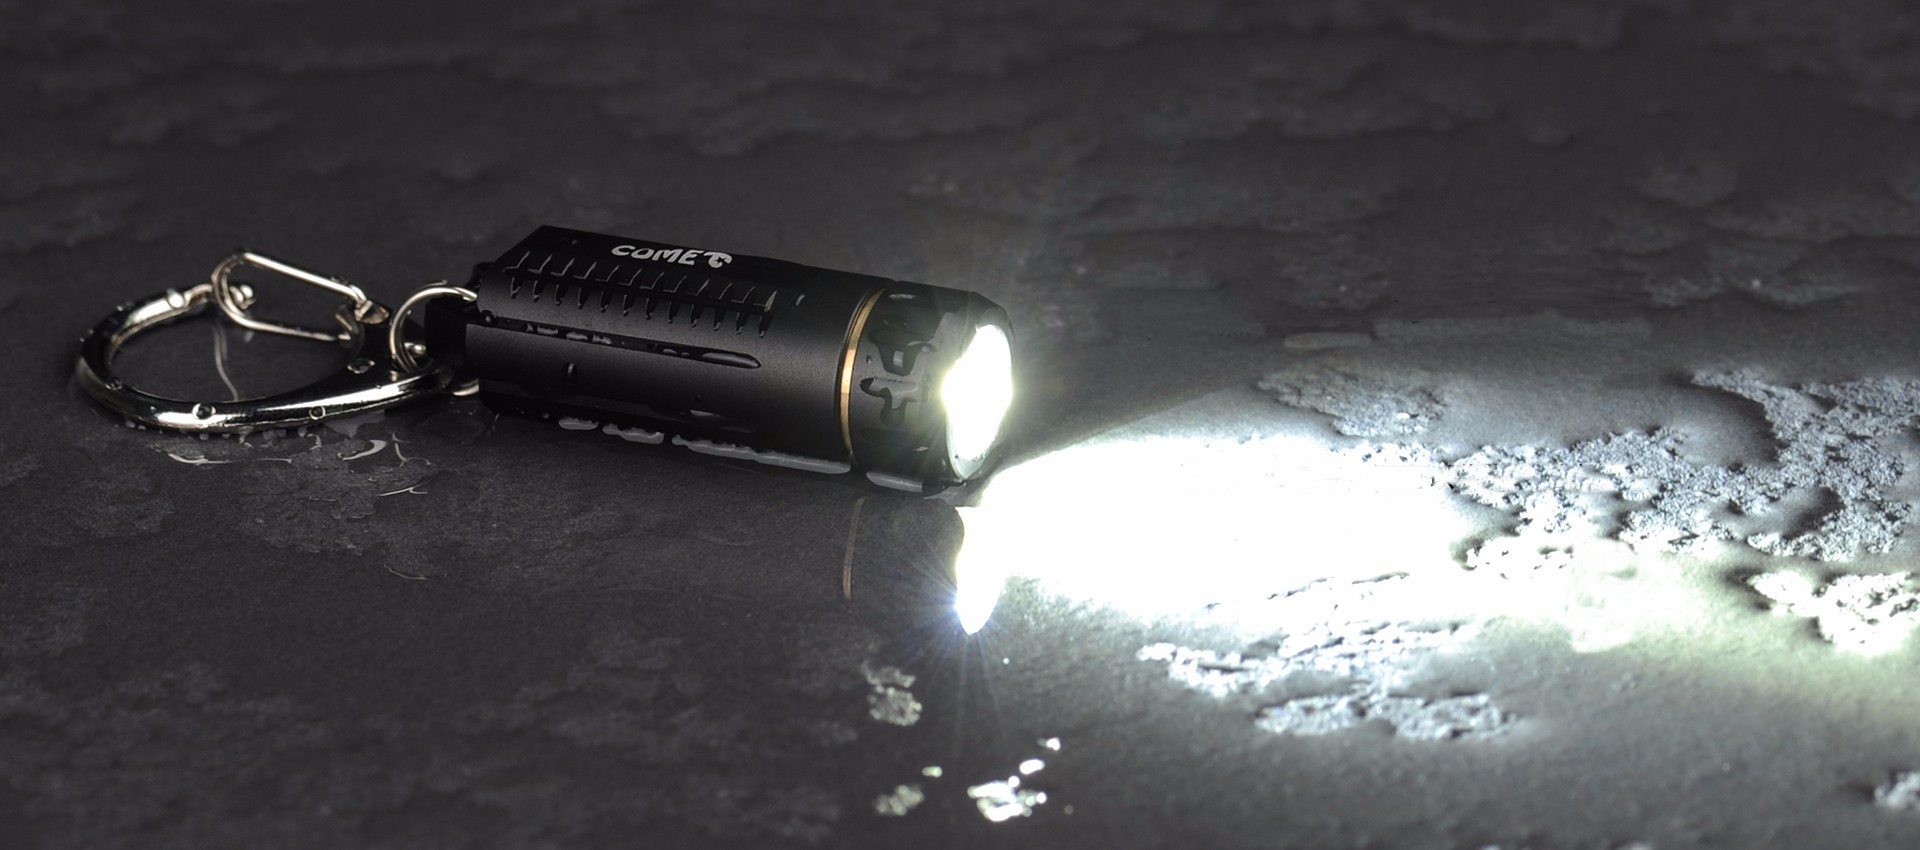 sunwayman comet keychain flashlight